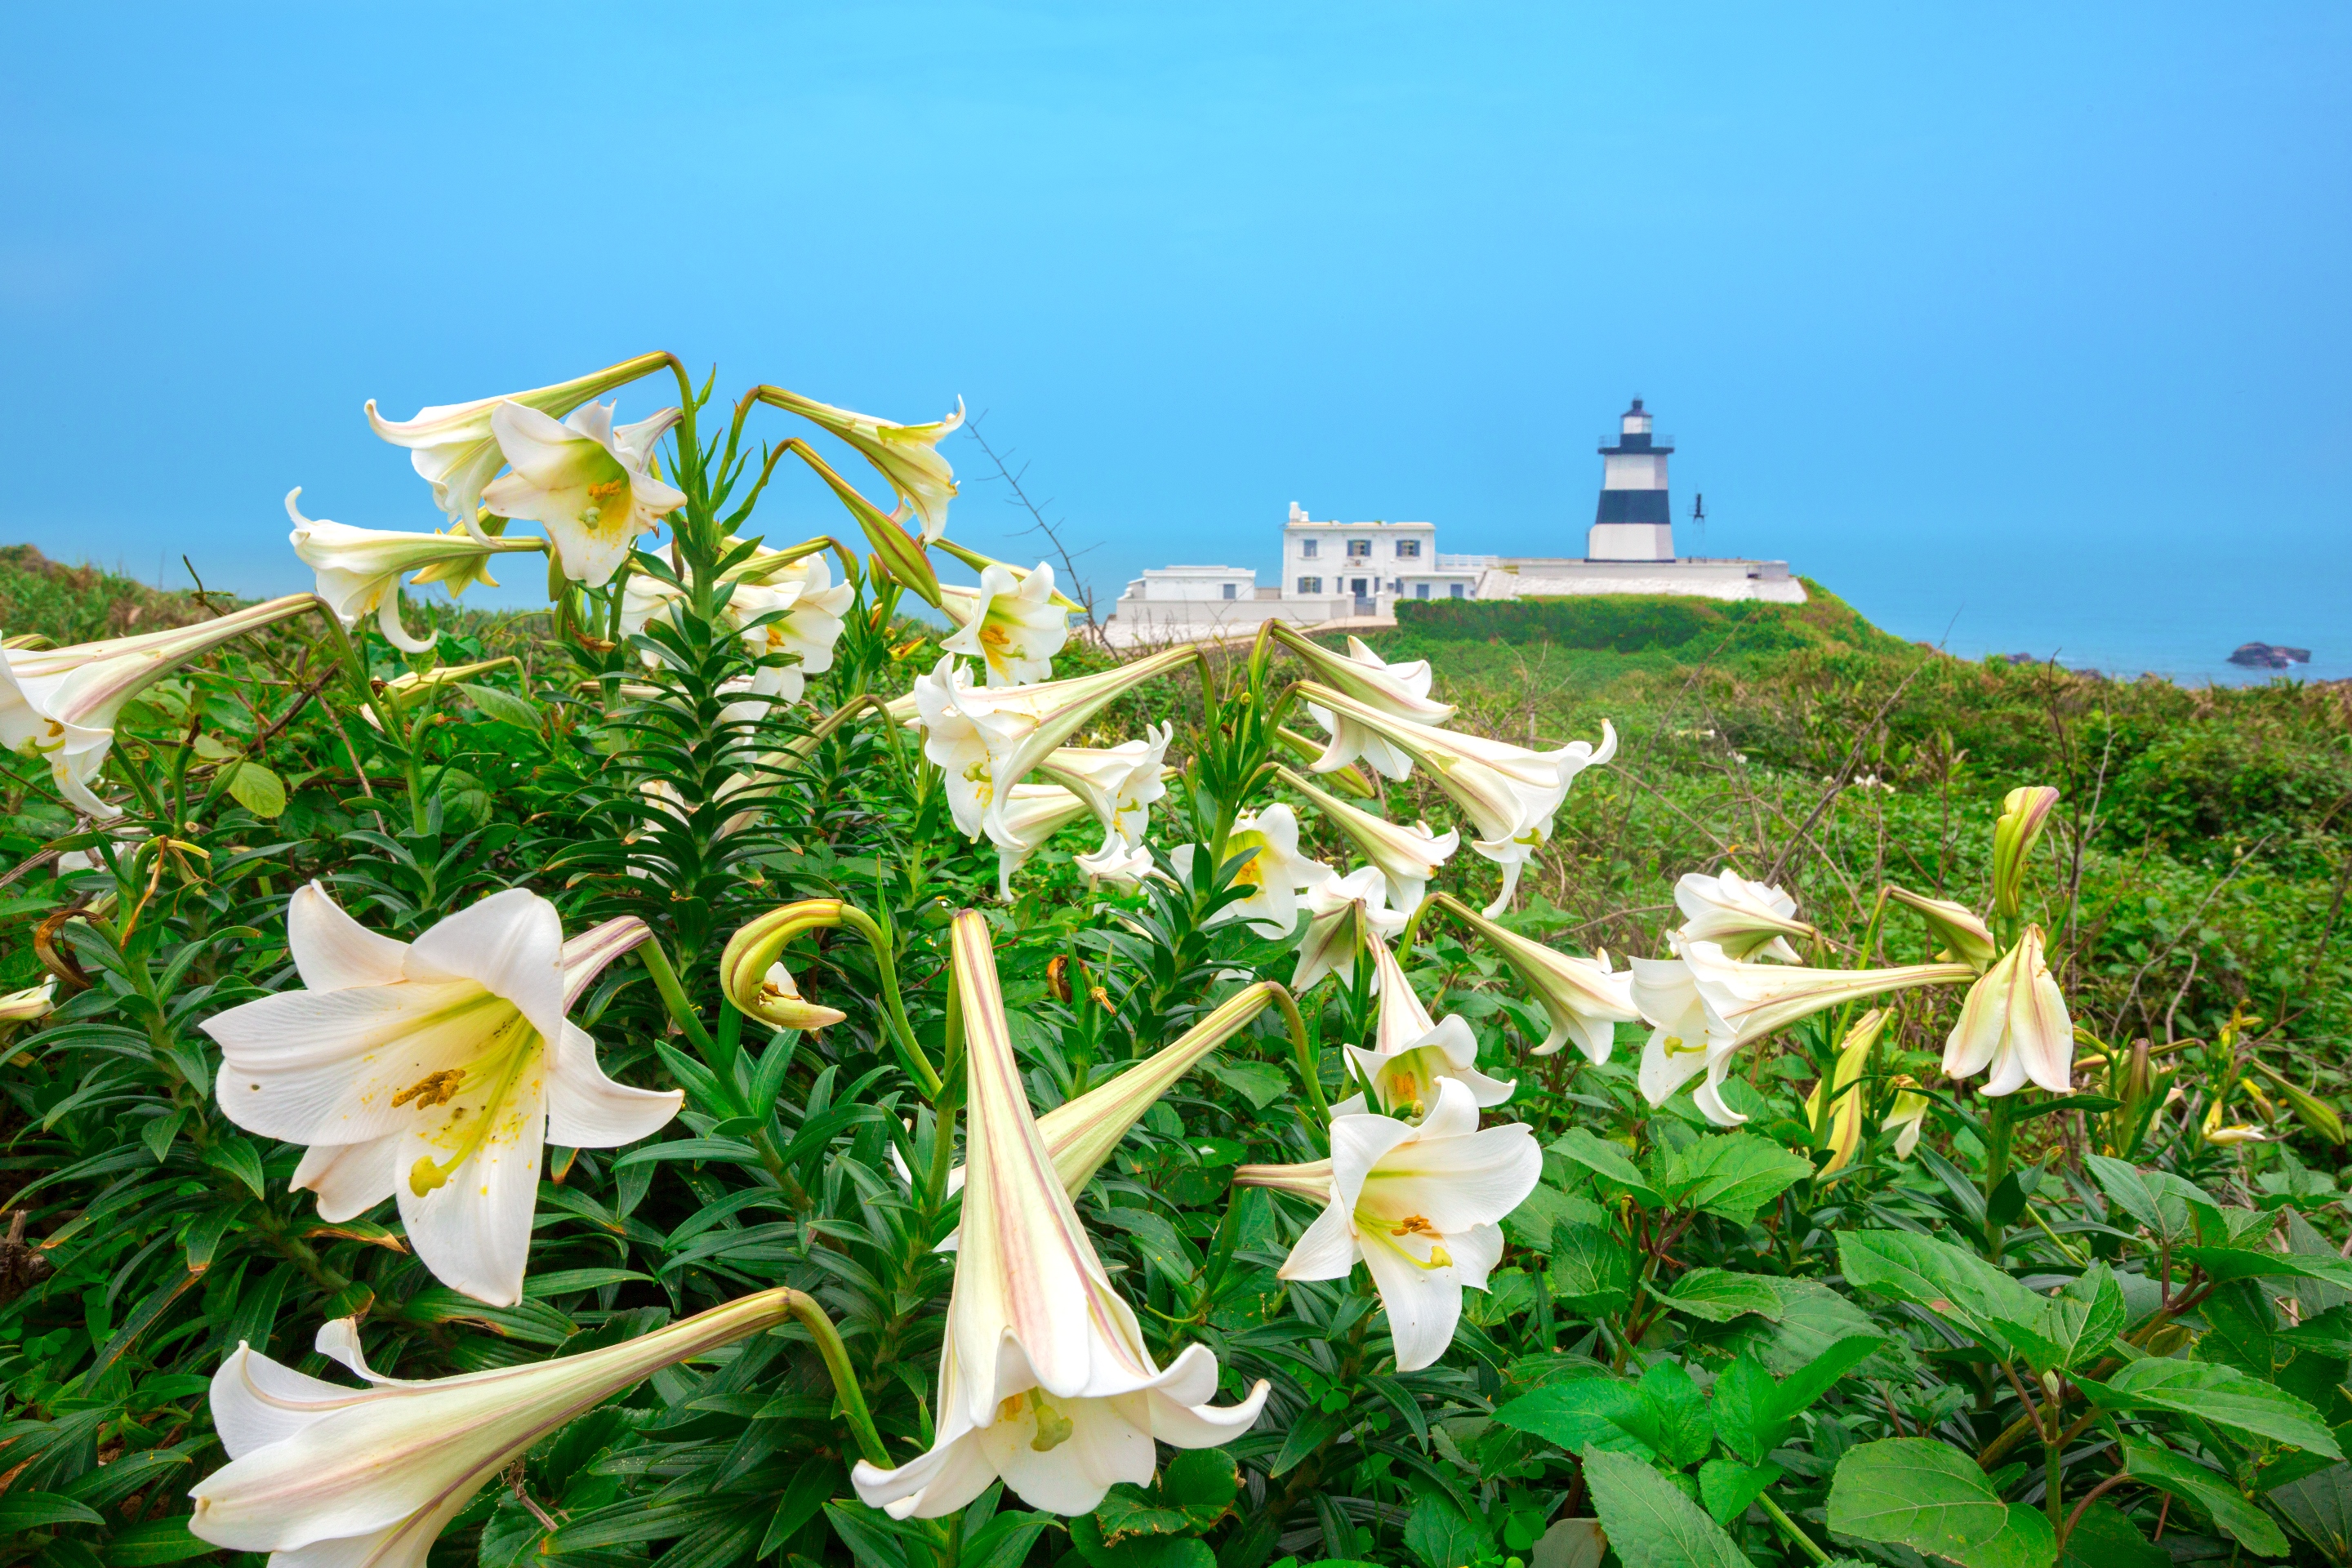 Fugui Cape Lighthouse